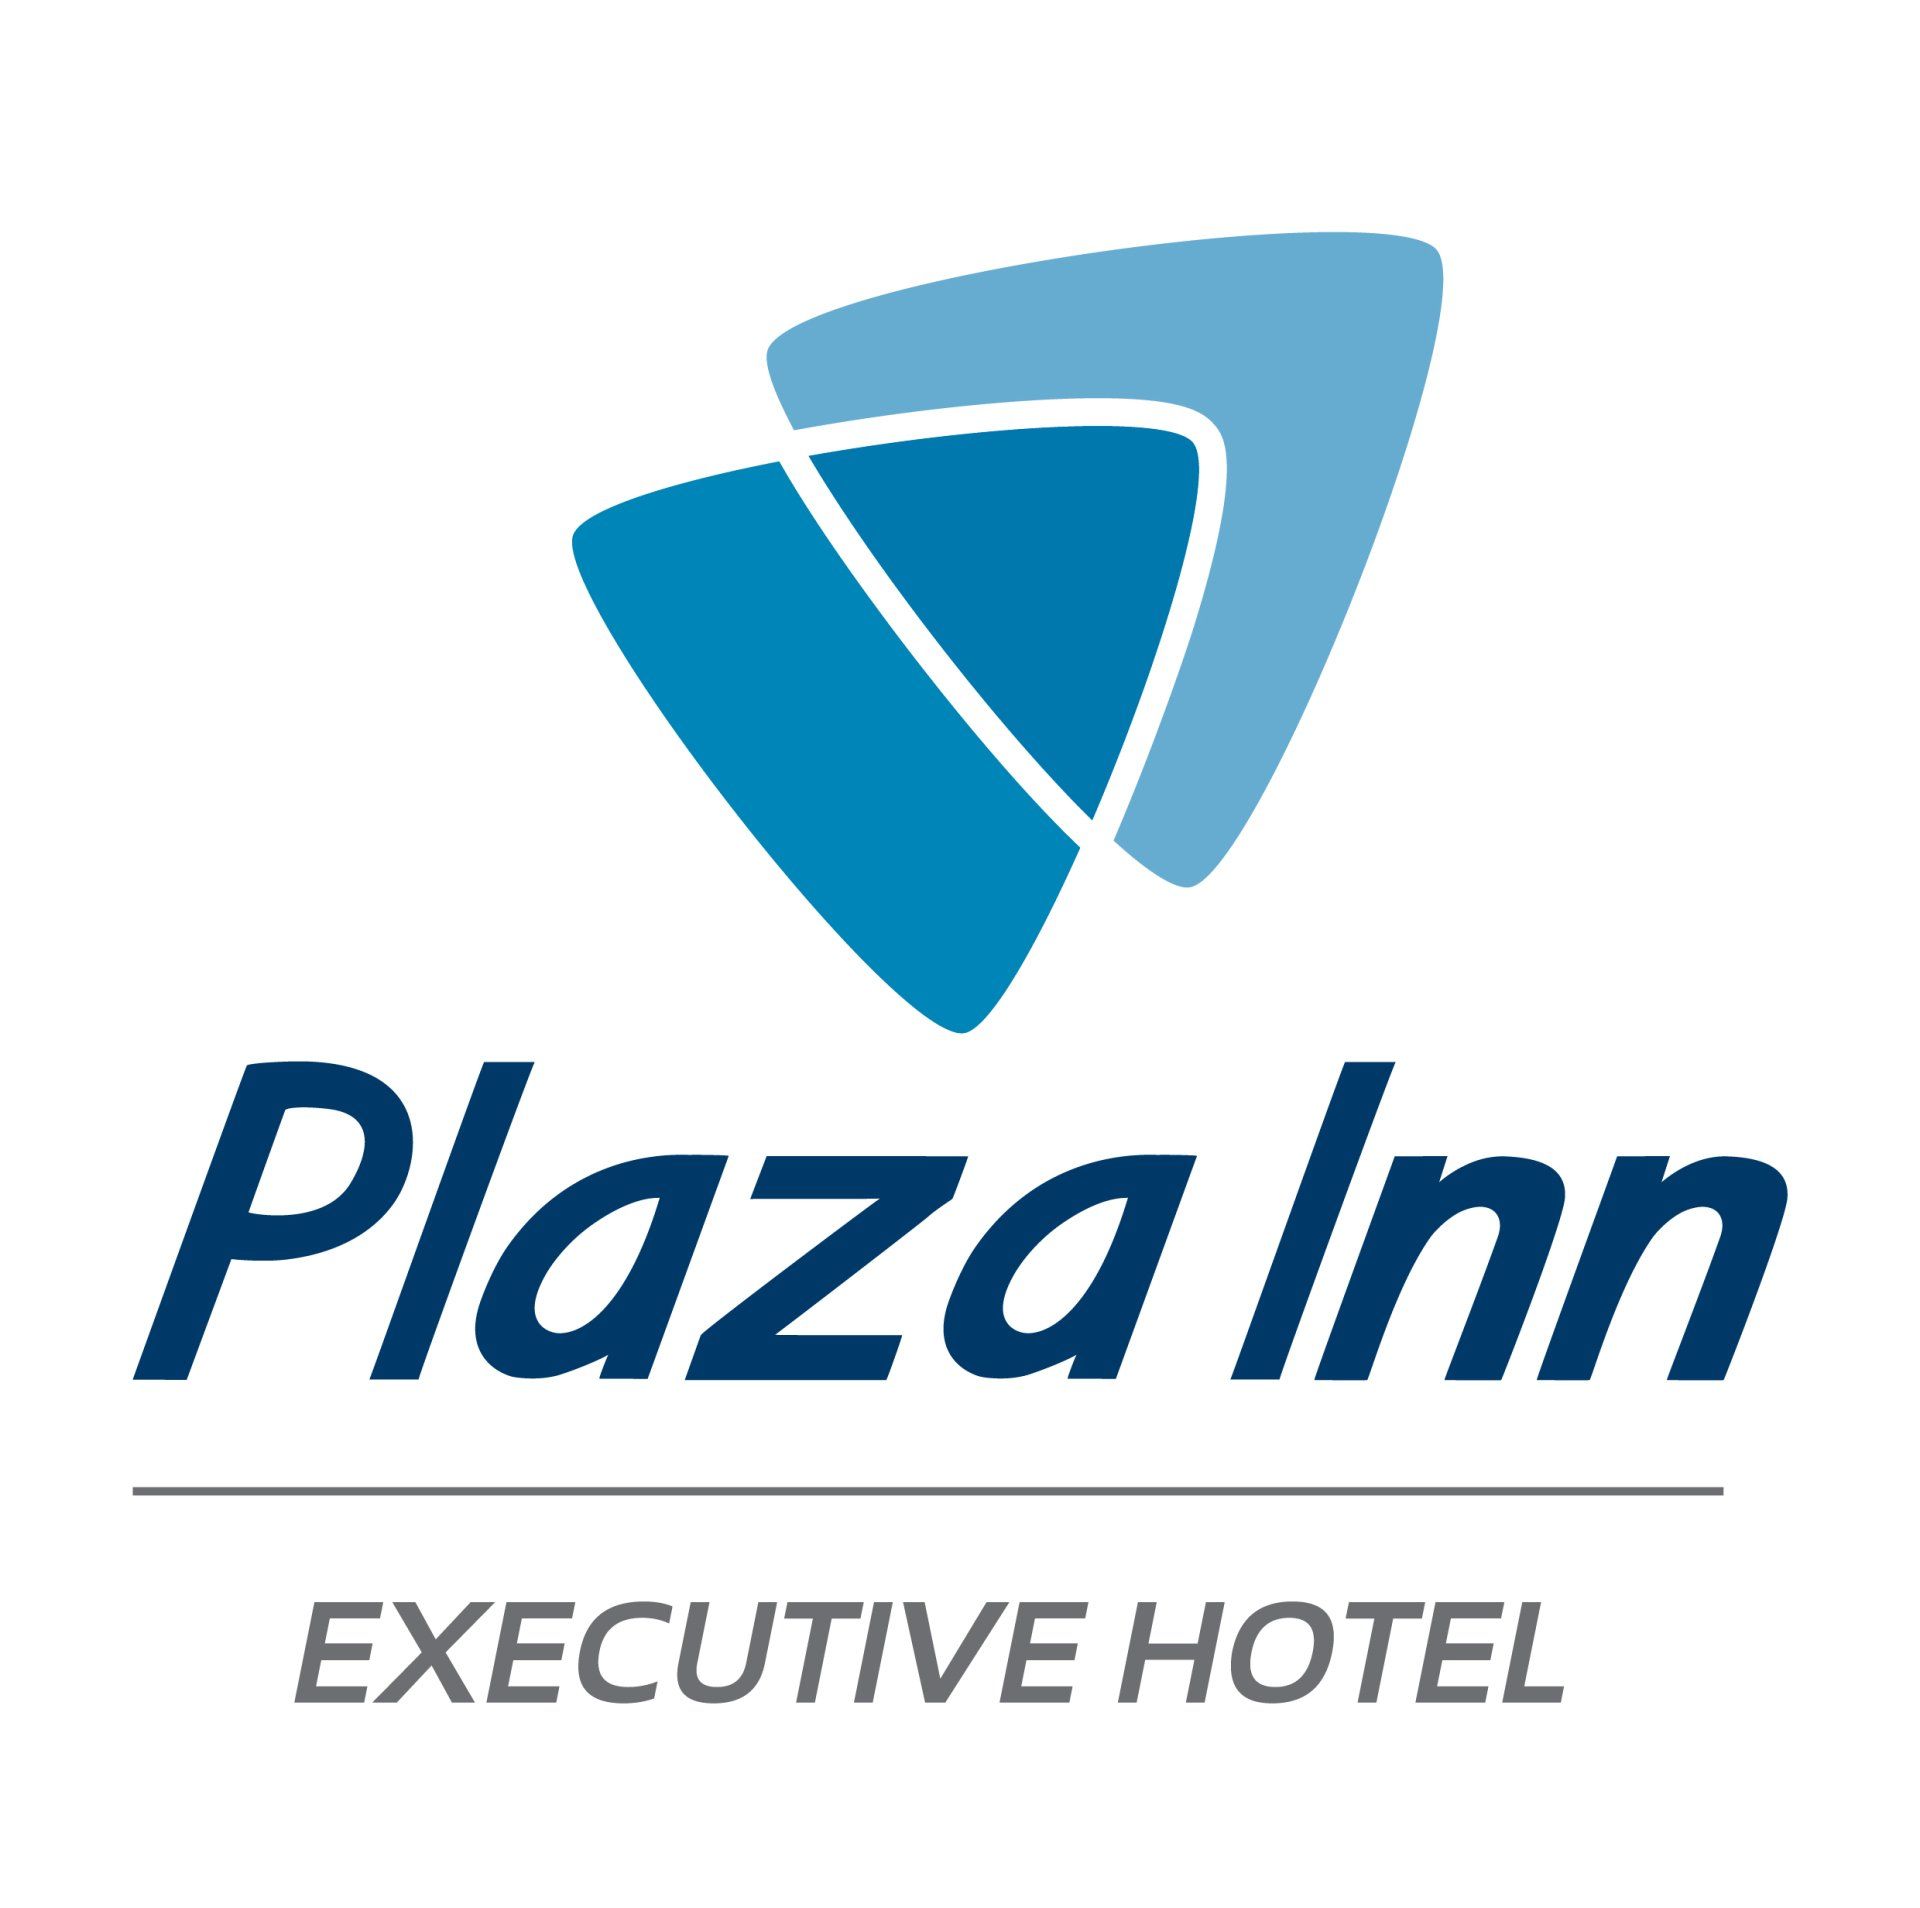 Plaza Inn Executive